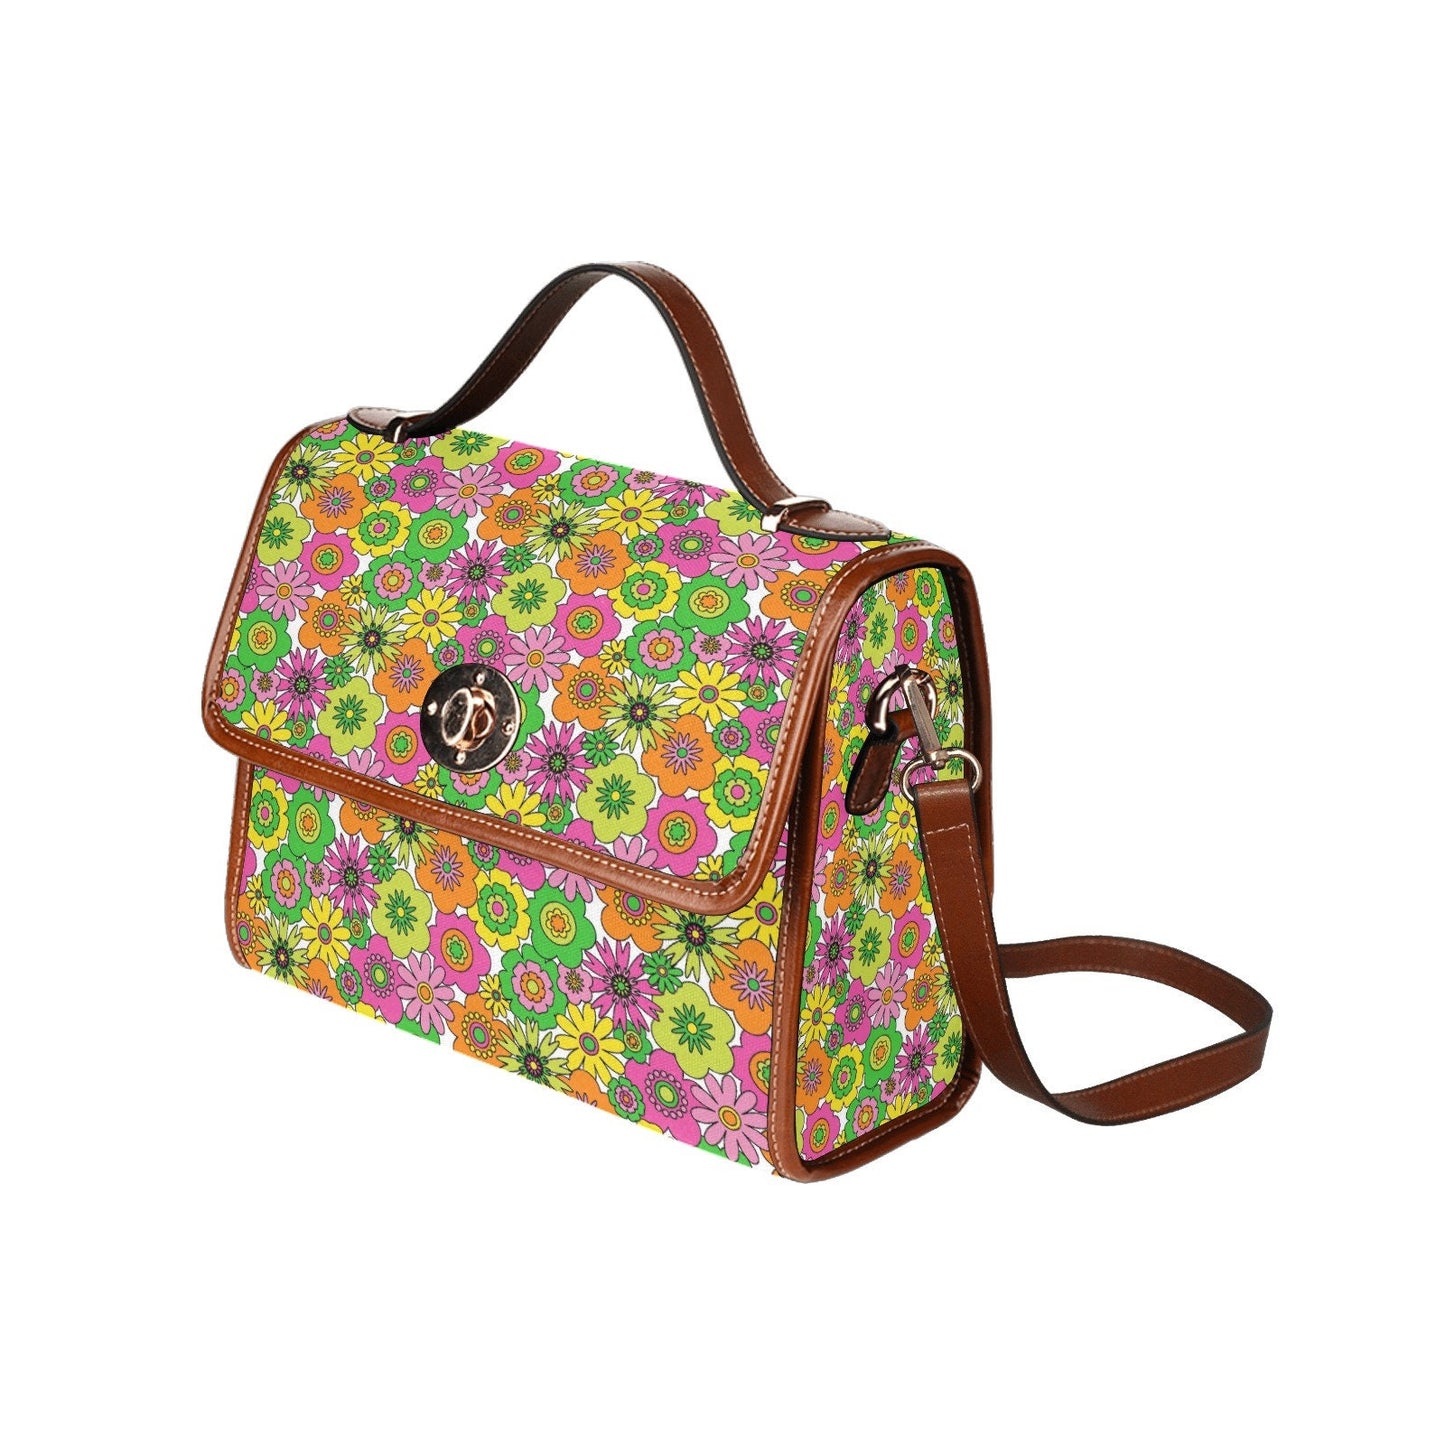 Women's Handbag, Retro Handbag, Women's Purse, 70s Style bag, 70s Style purse, Floral Handbag, Neon Bag, 70s inspired, 60s style purse